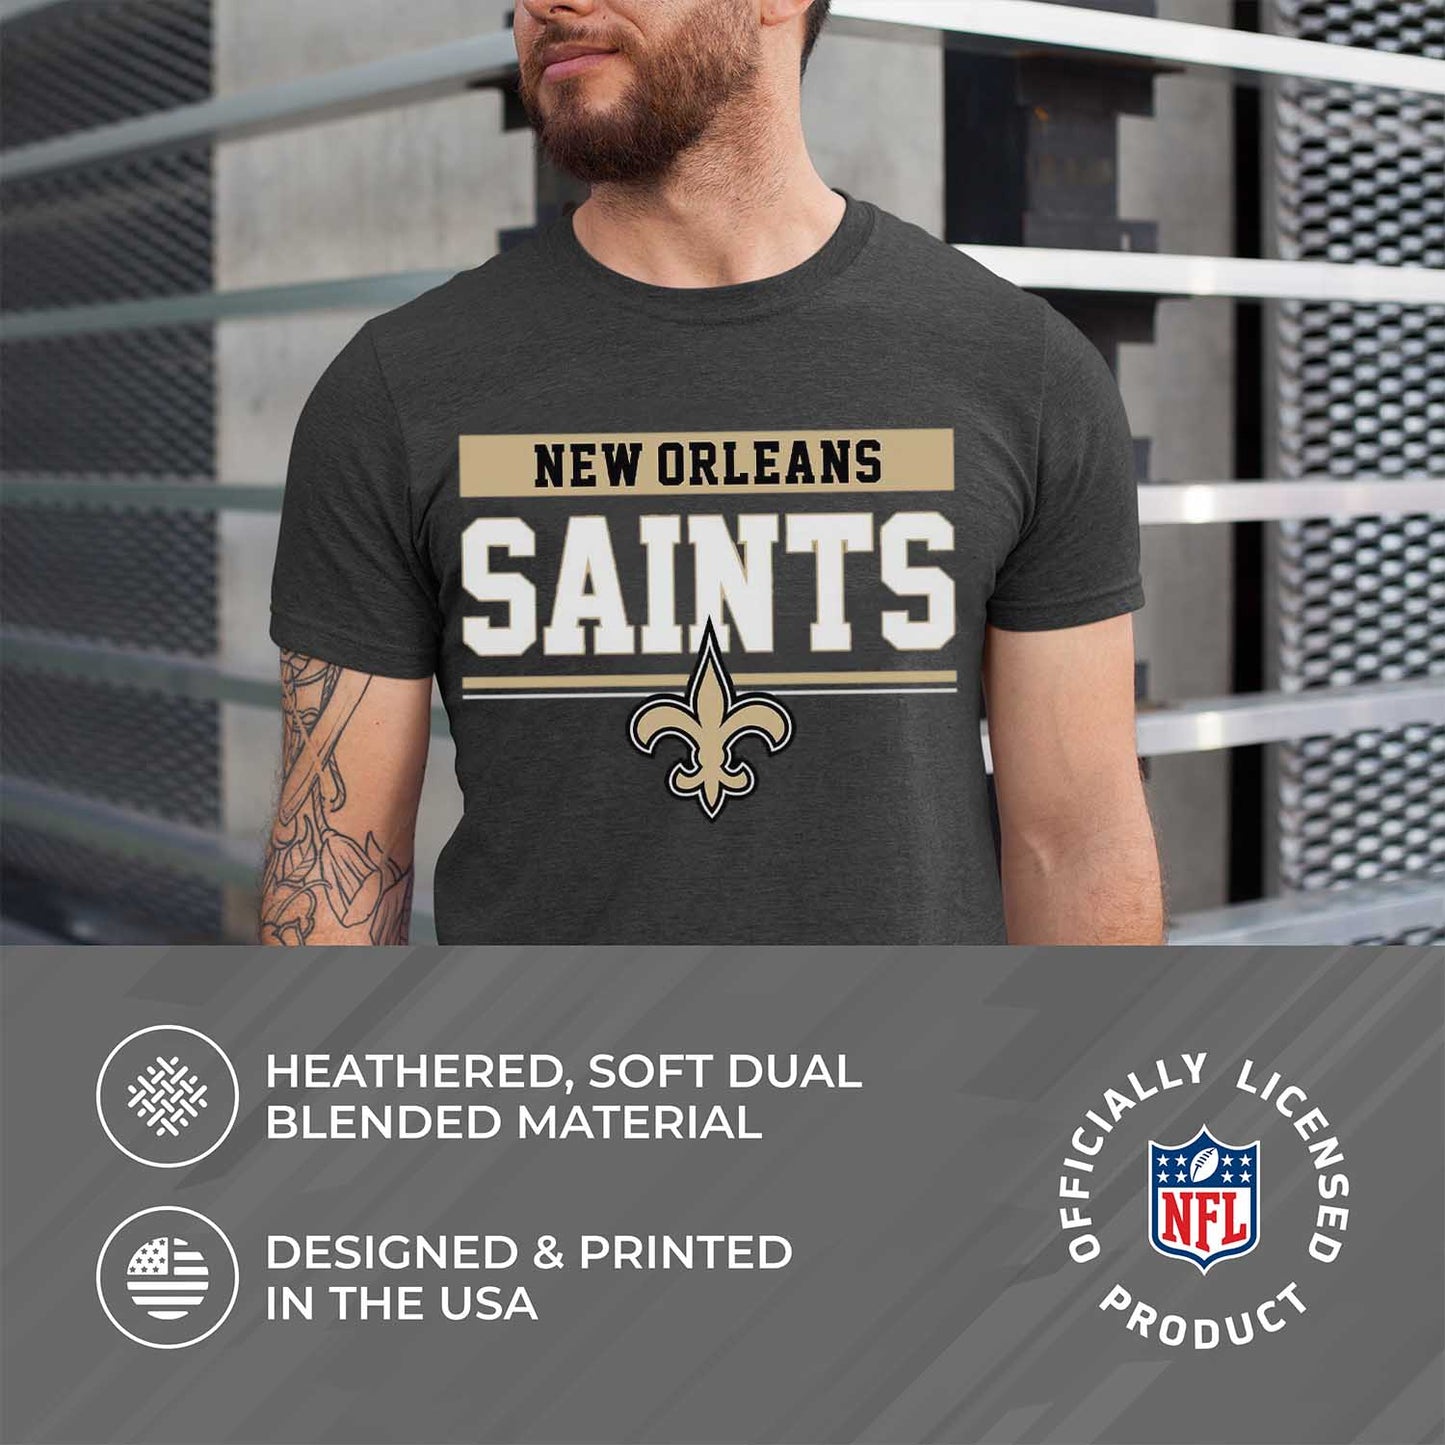 New Orleans Saints NFL Adult Team Block Tagless T-Shirt - Charcoal